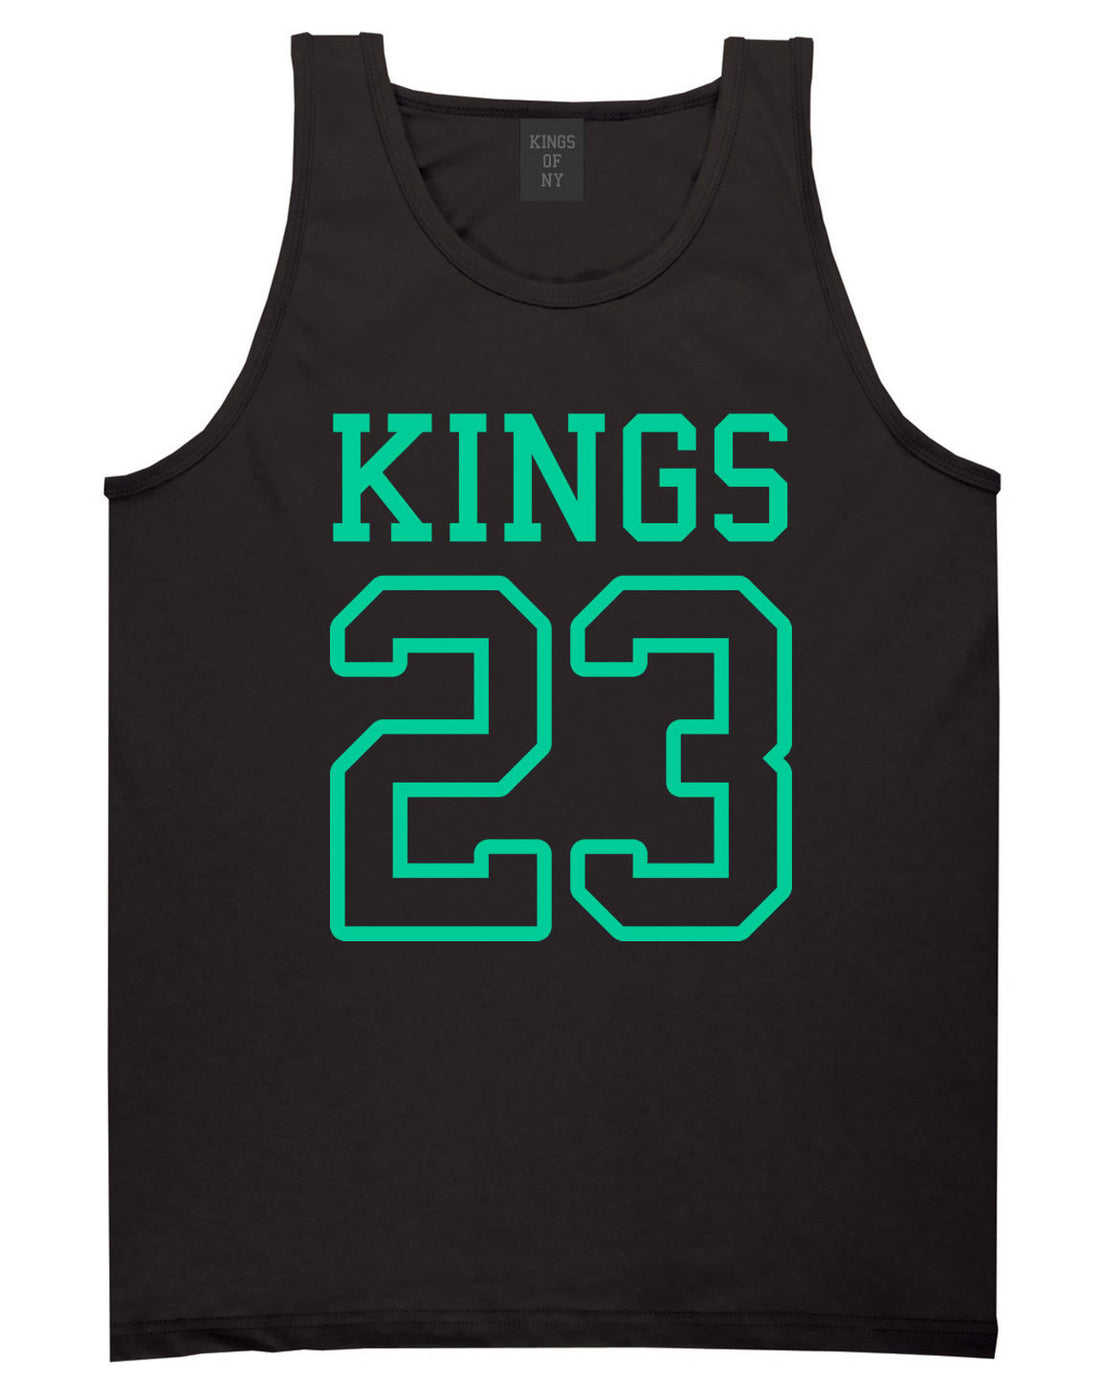 KINGS 23 Jersey Tank Top in Black By Kings Of NY